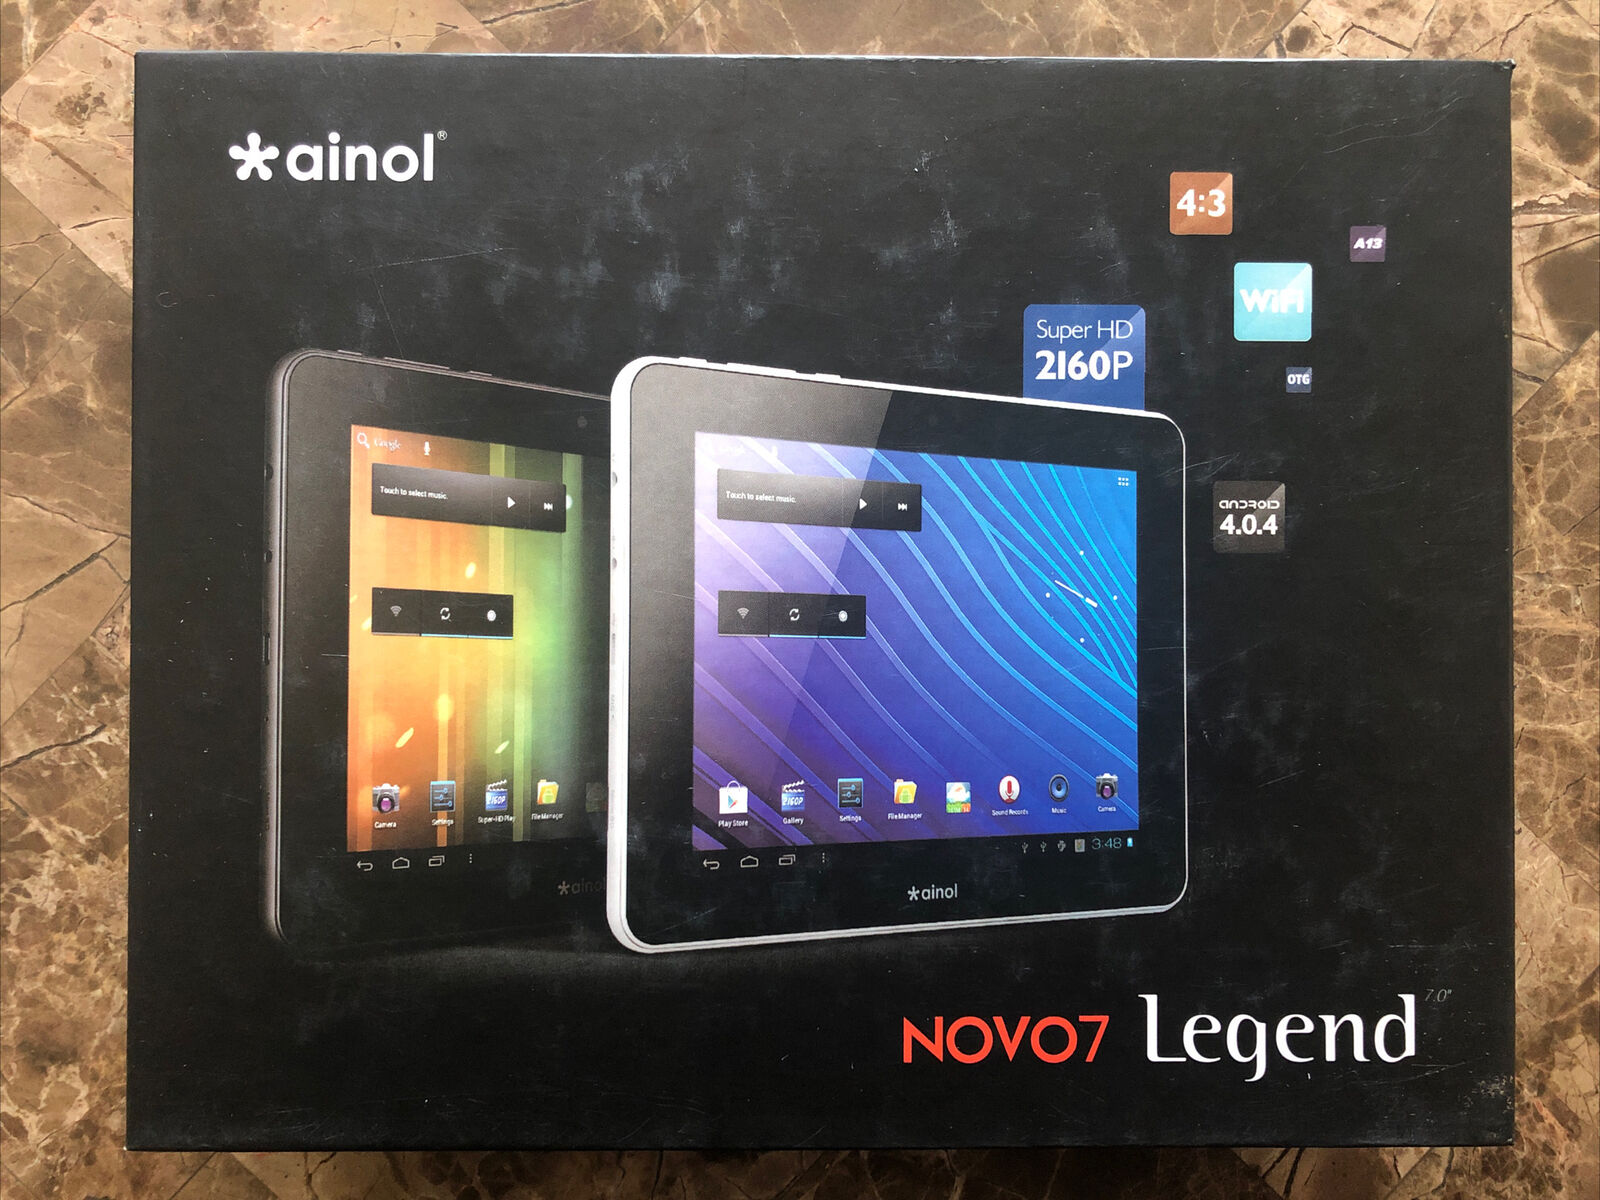 Ainol Novo 7 Legend 8GB, 7 inch, Wi-Fi 4:3 Super HD 2160p Android 4.0 NEW